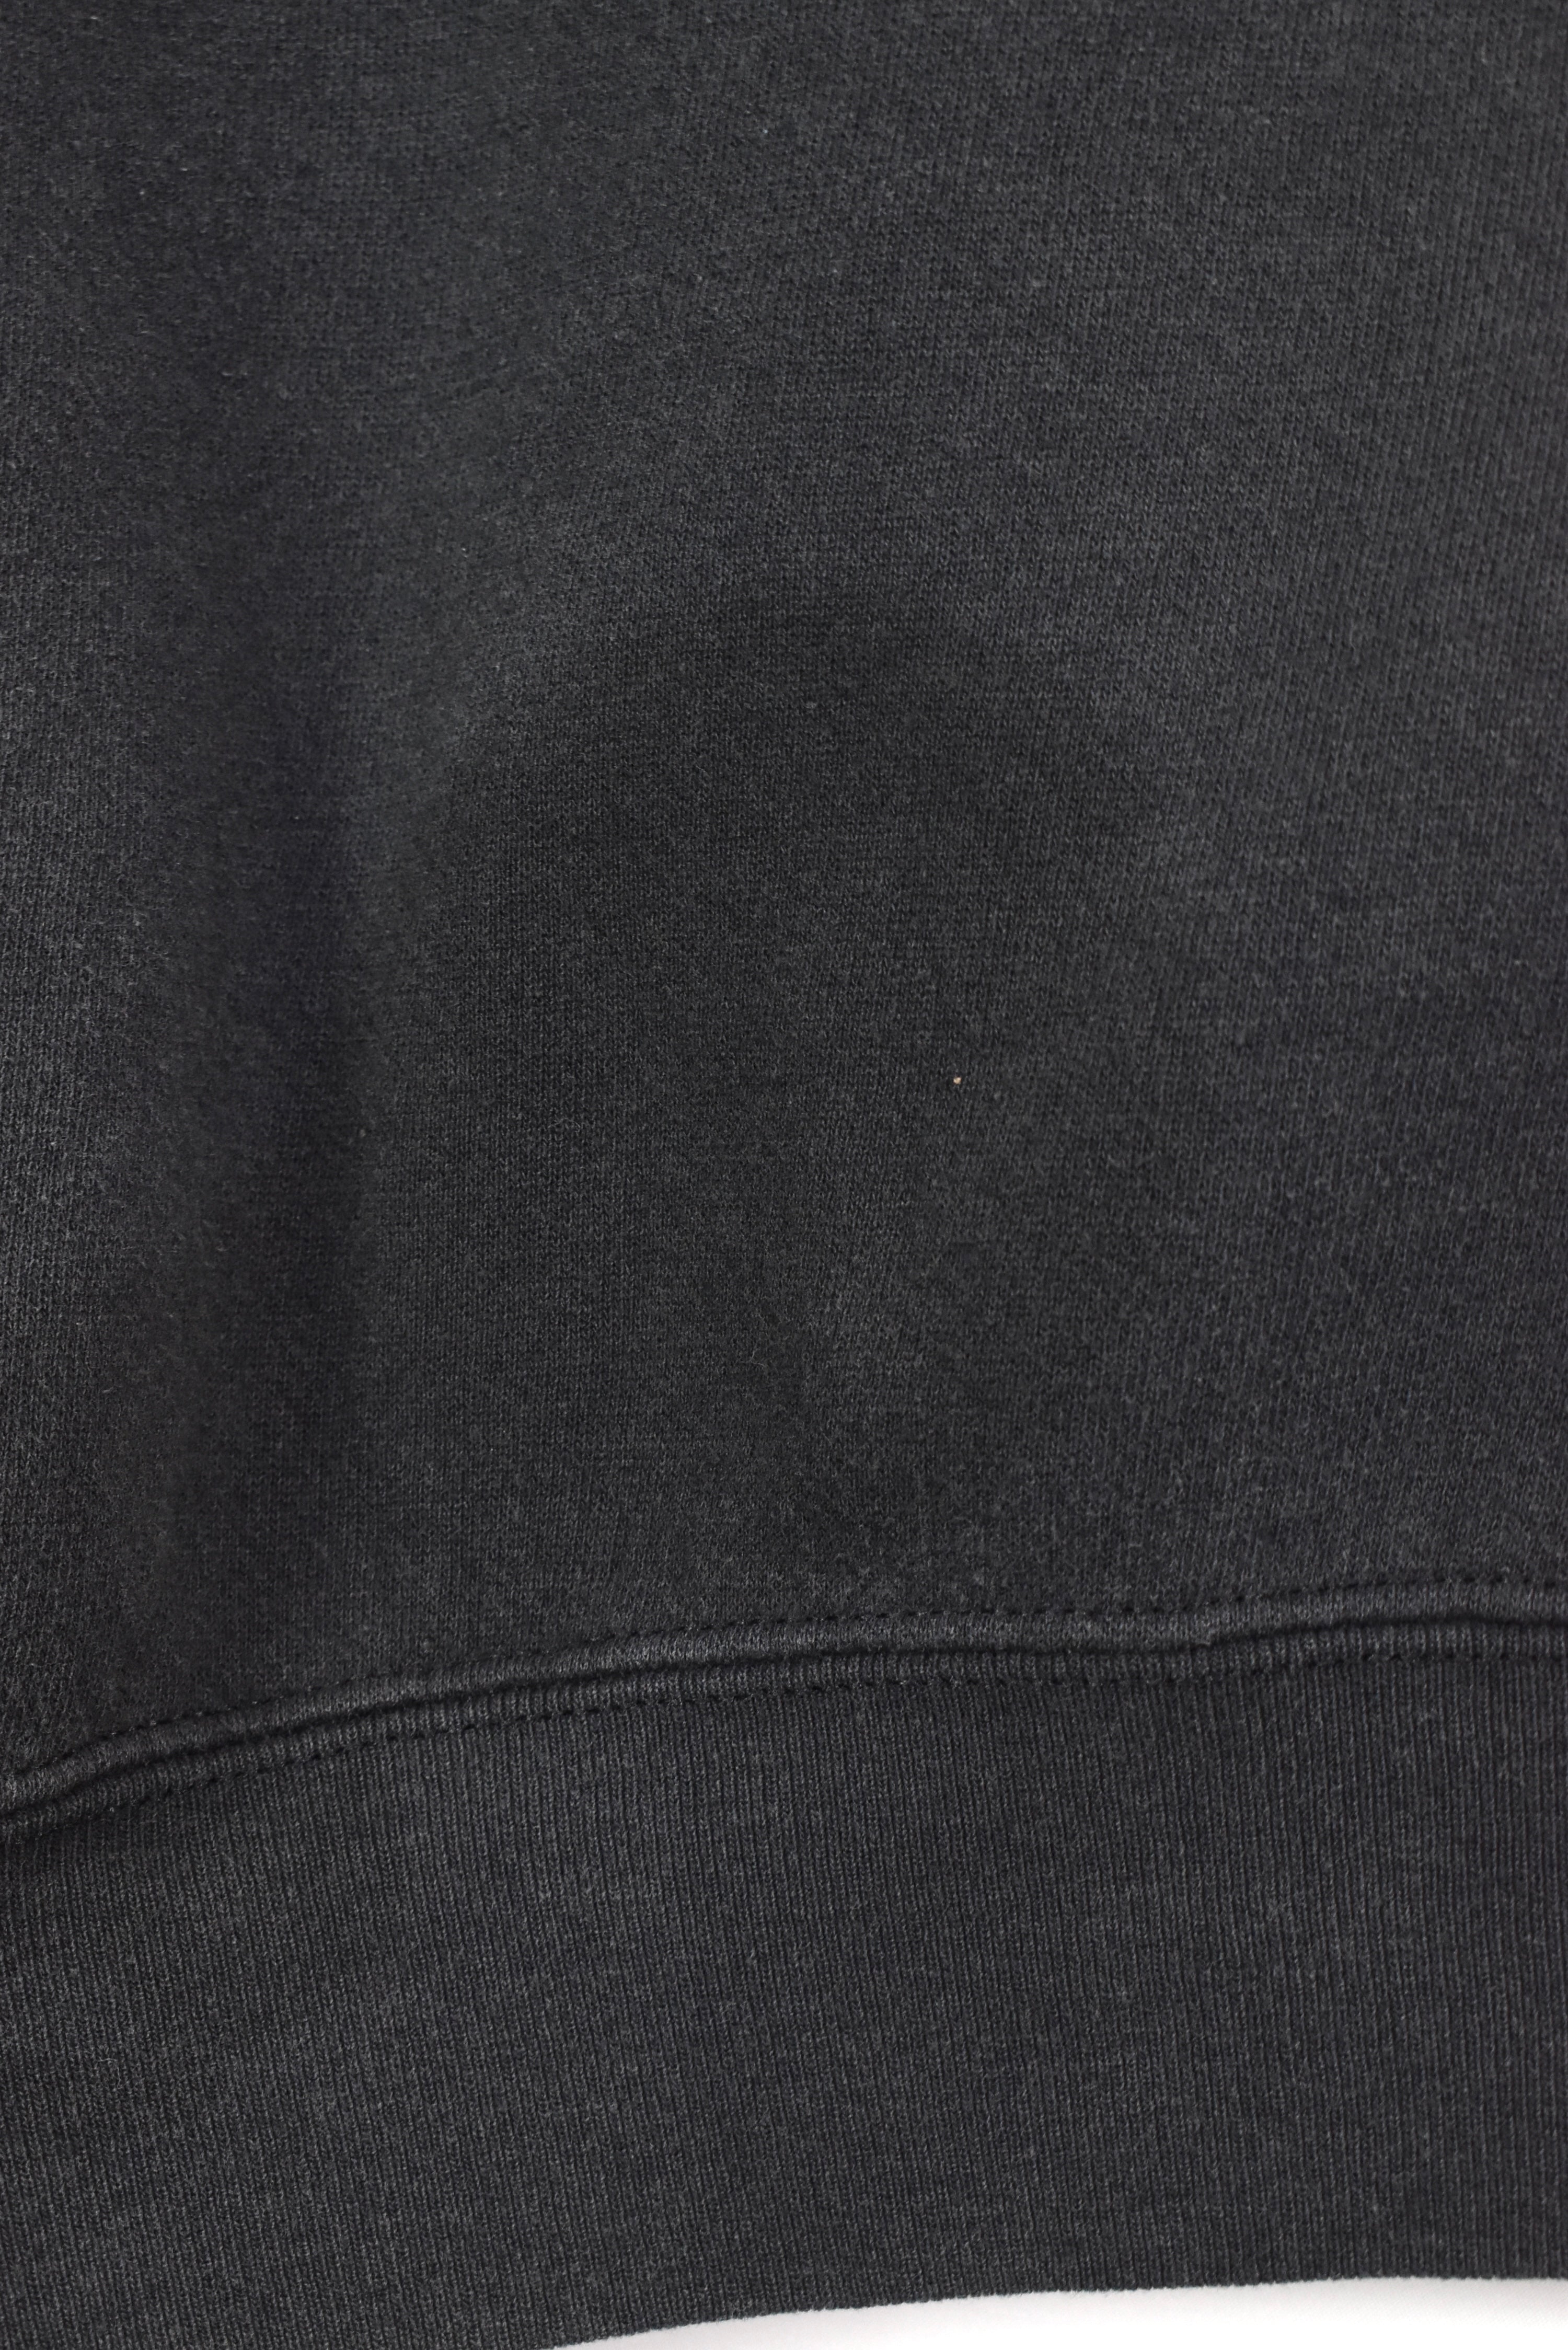 Vintage Philadelphia Flyers sweatshirt, NHL embroidered crewneck - XL, black PRO SPORT